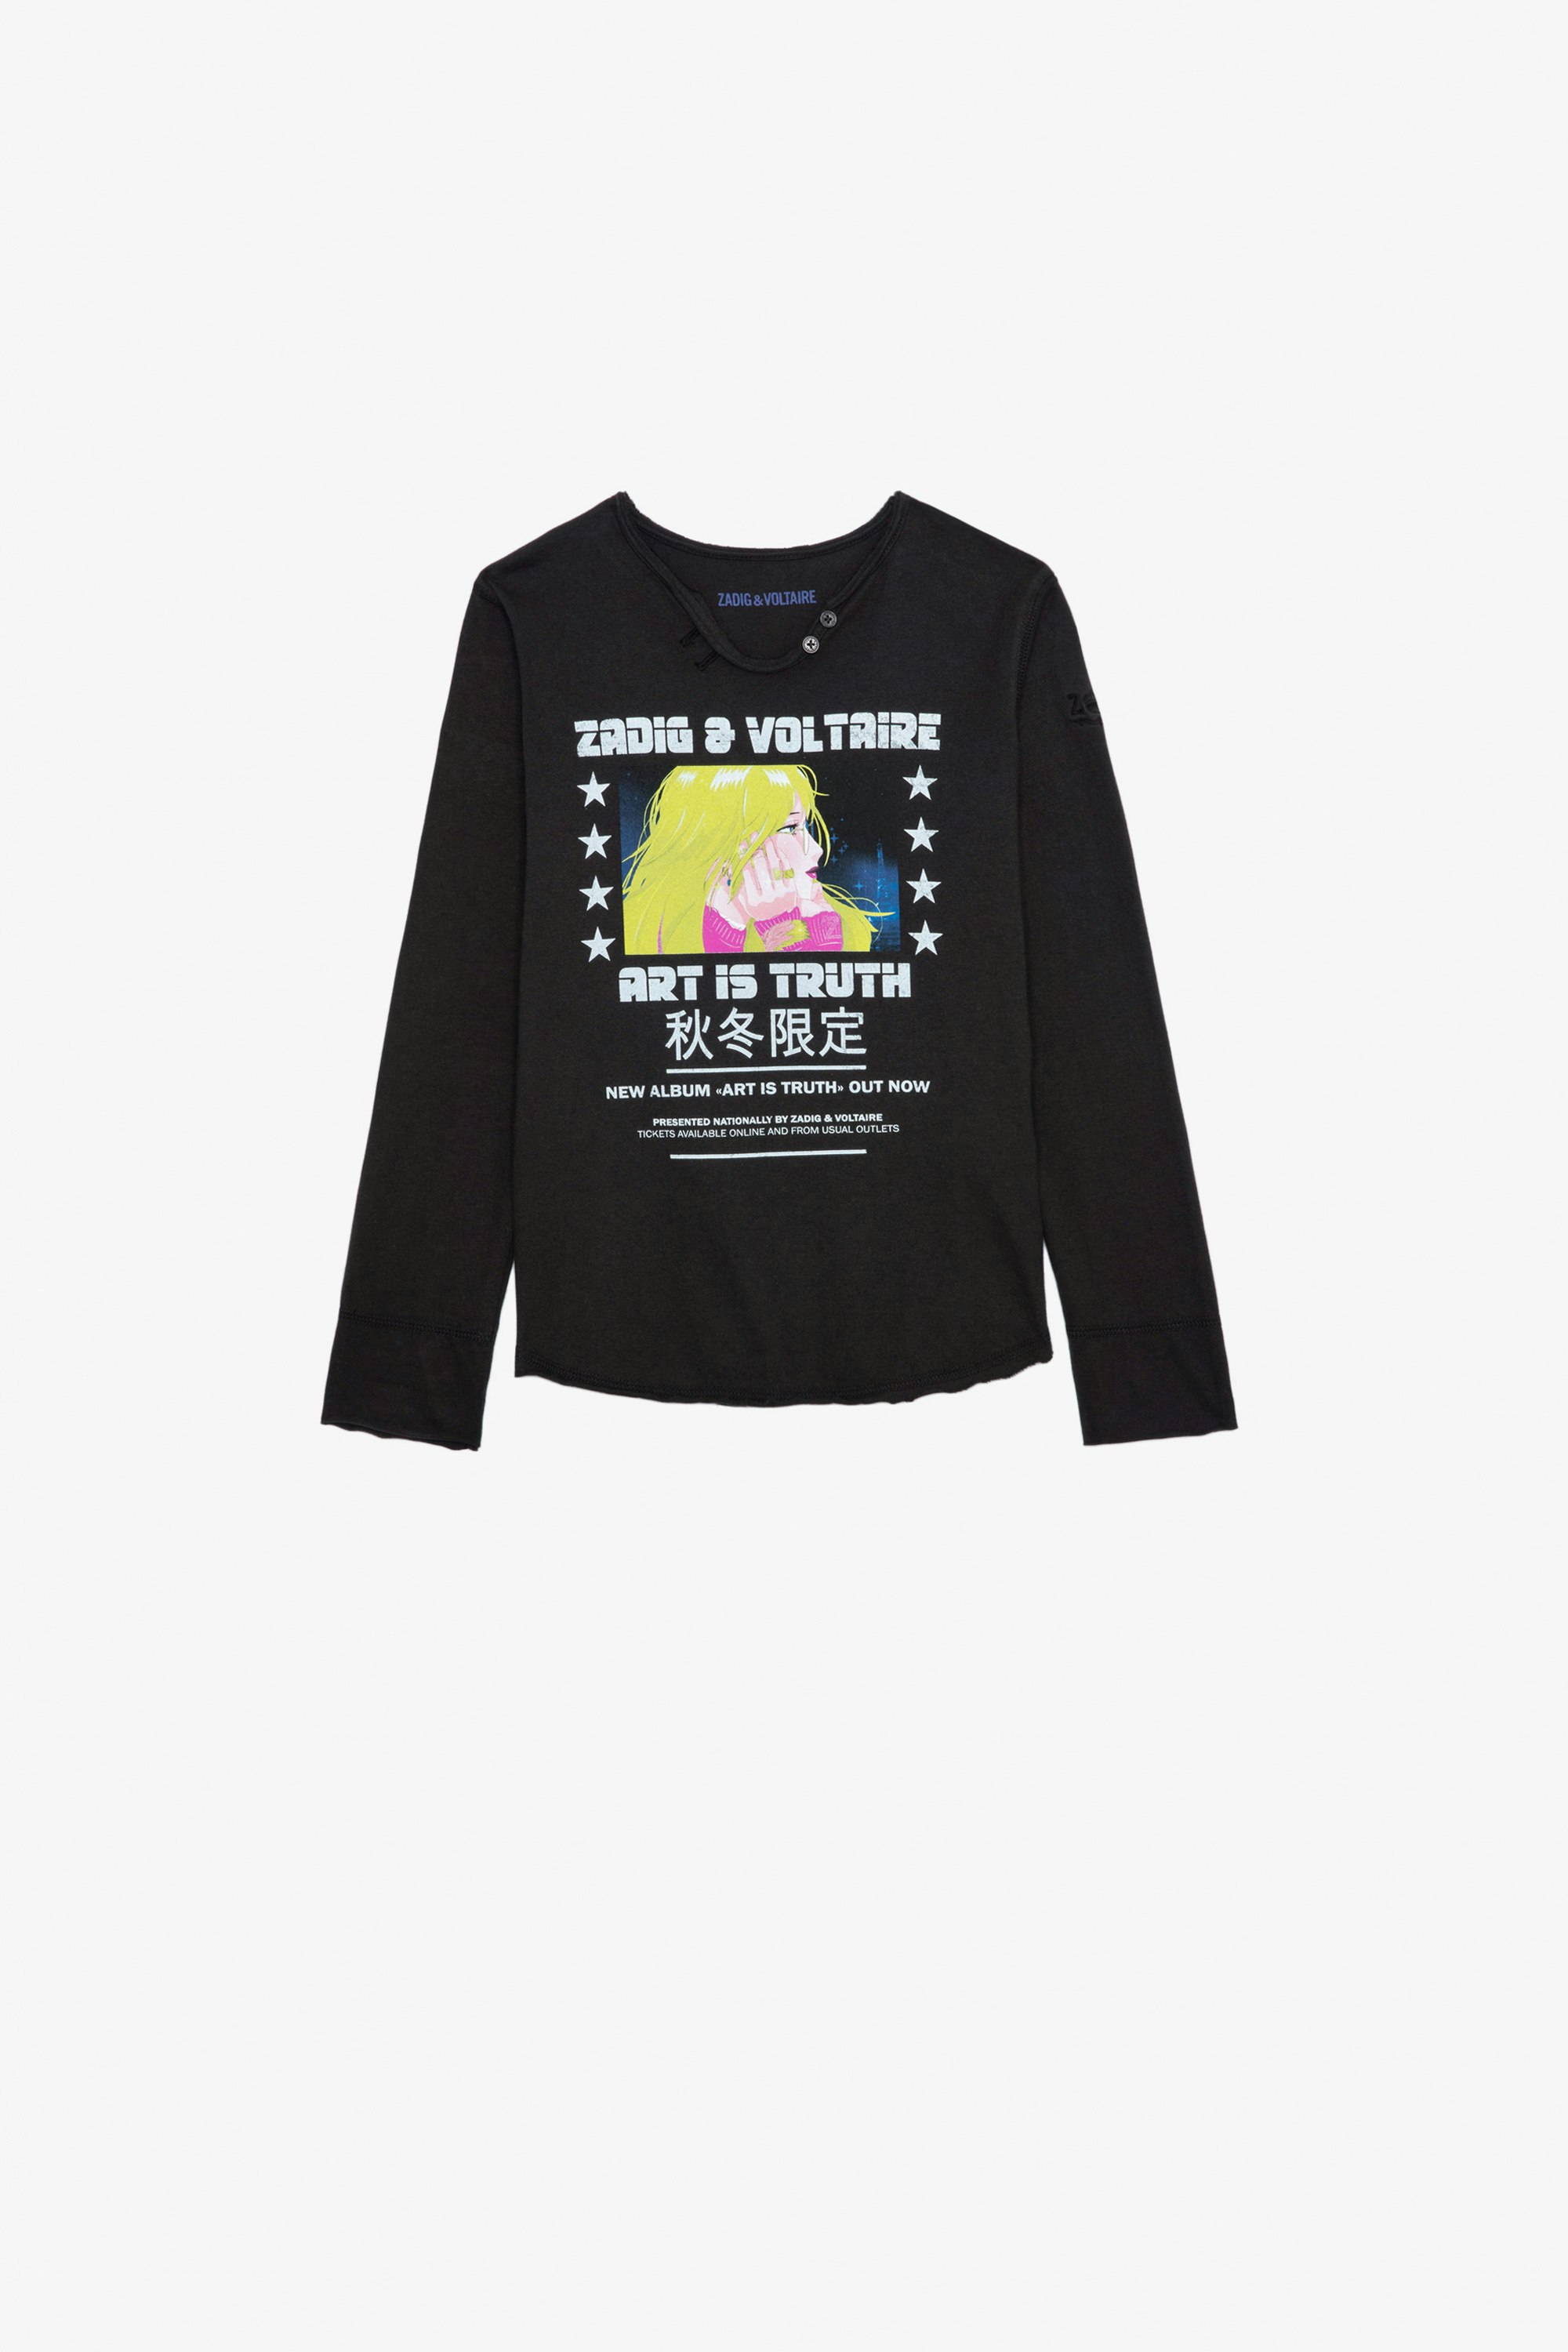 Boxo Girls’ T-Shirt Girls’ black long-sleeved cotton jersey T-shirt with manga print.